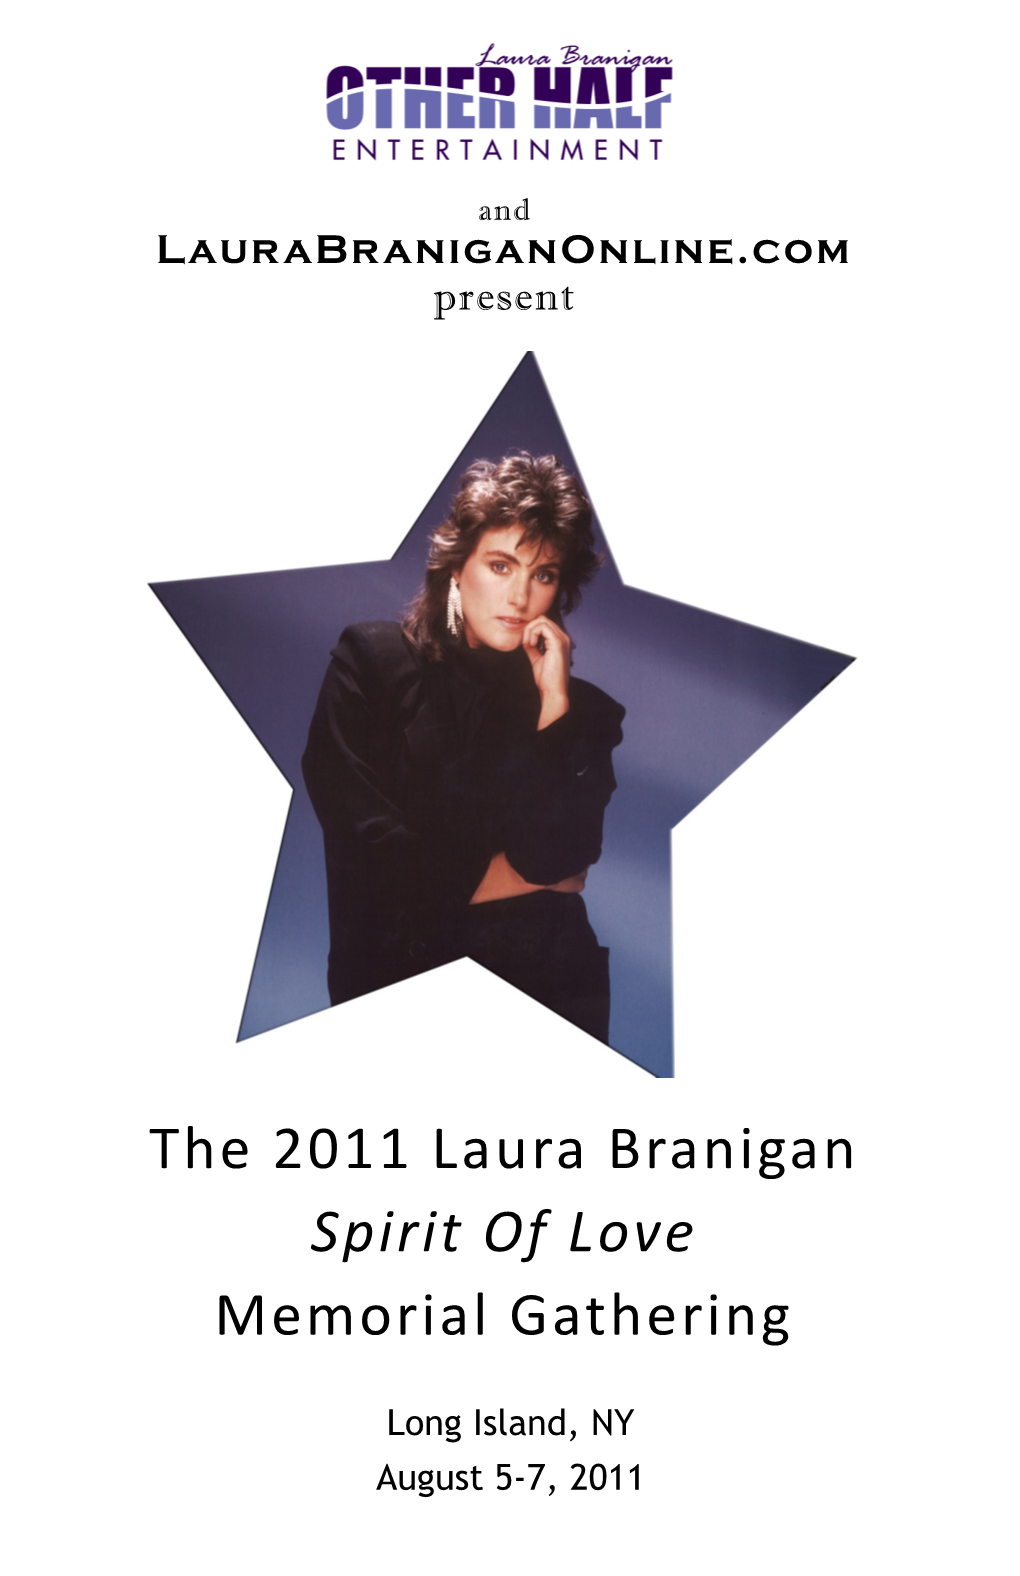 The 2011 Laura Branigan Spirit of Love Memorial Gathering